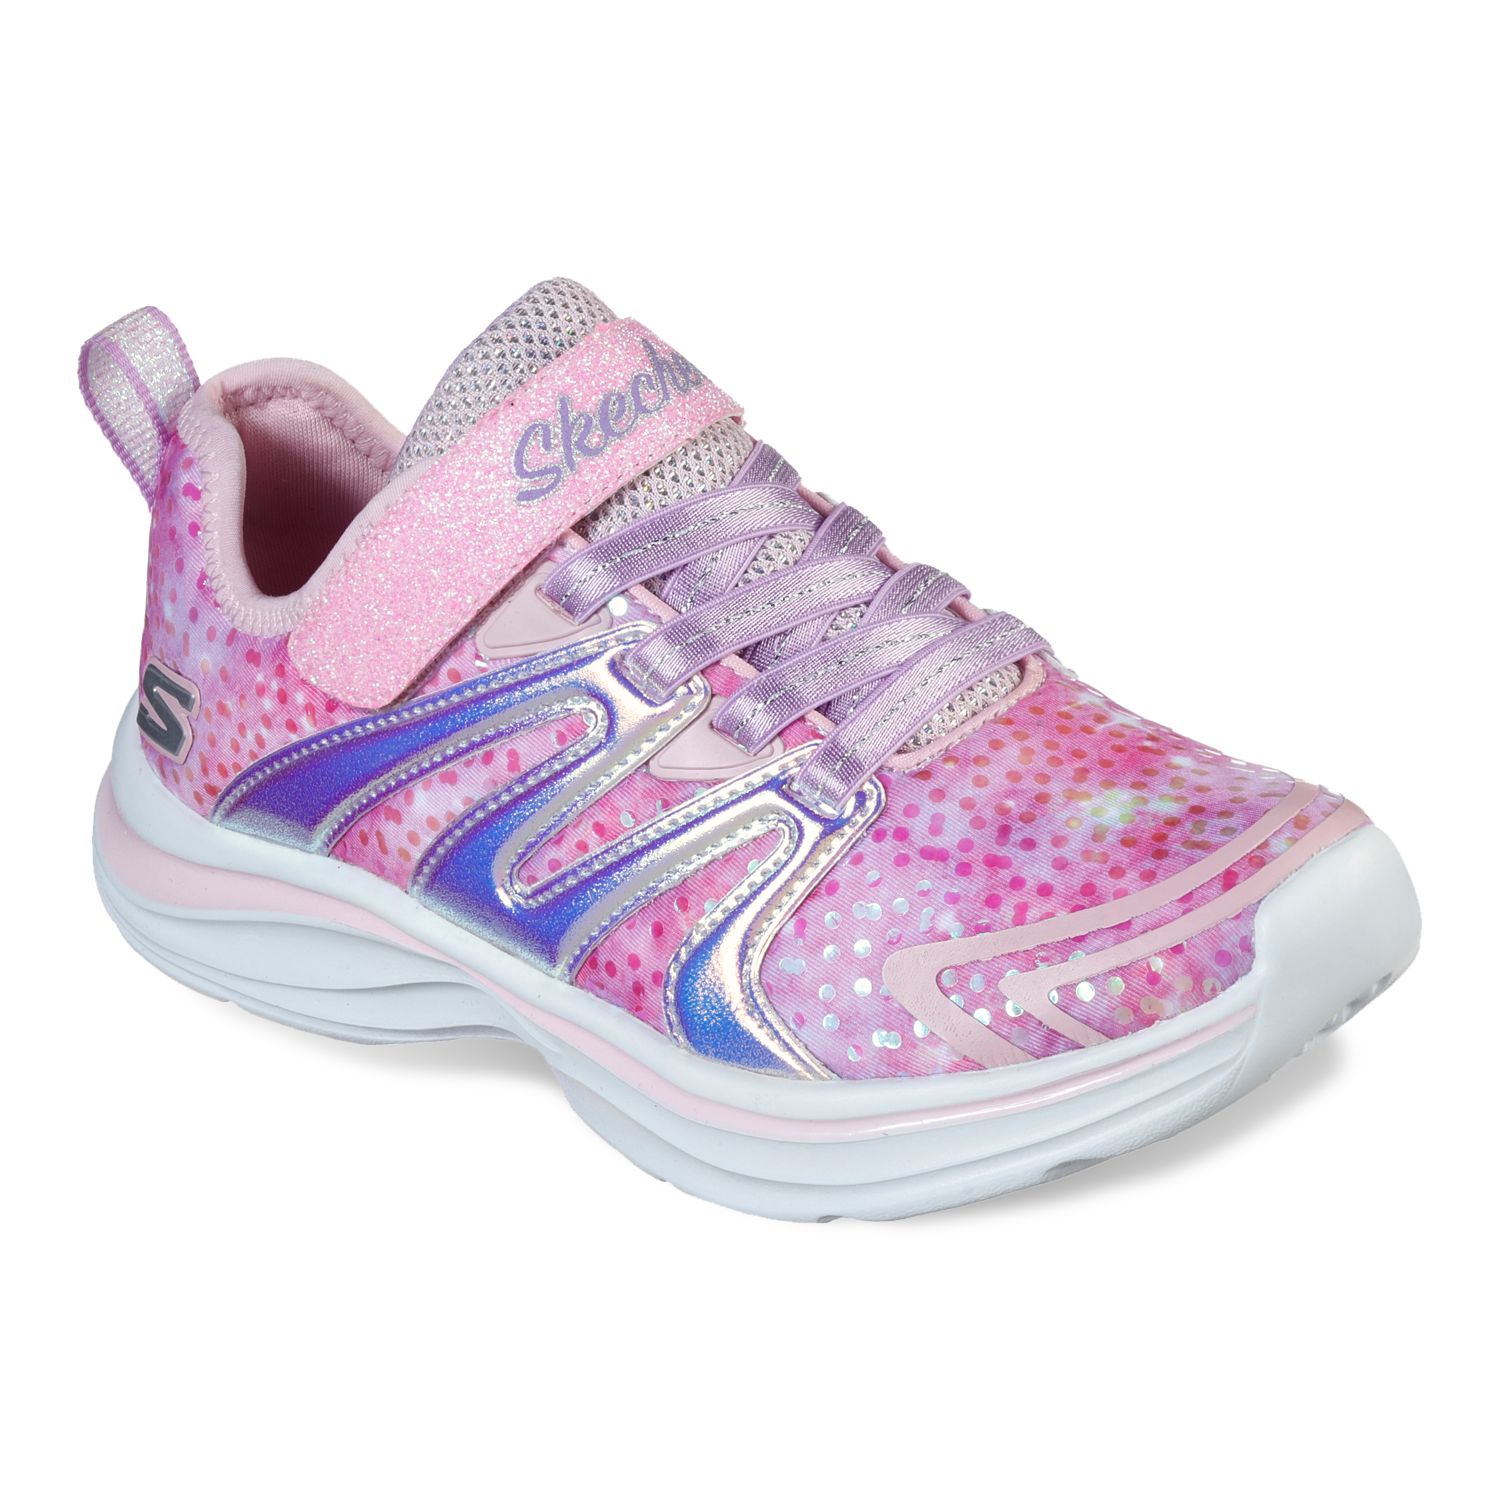 unicorn tennis shoes for girls